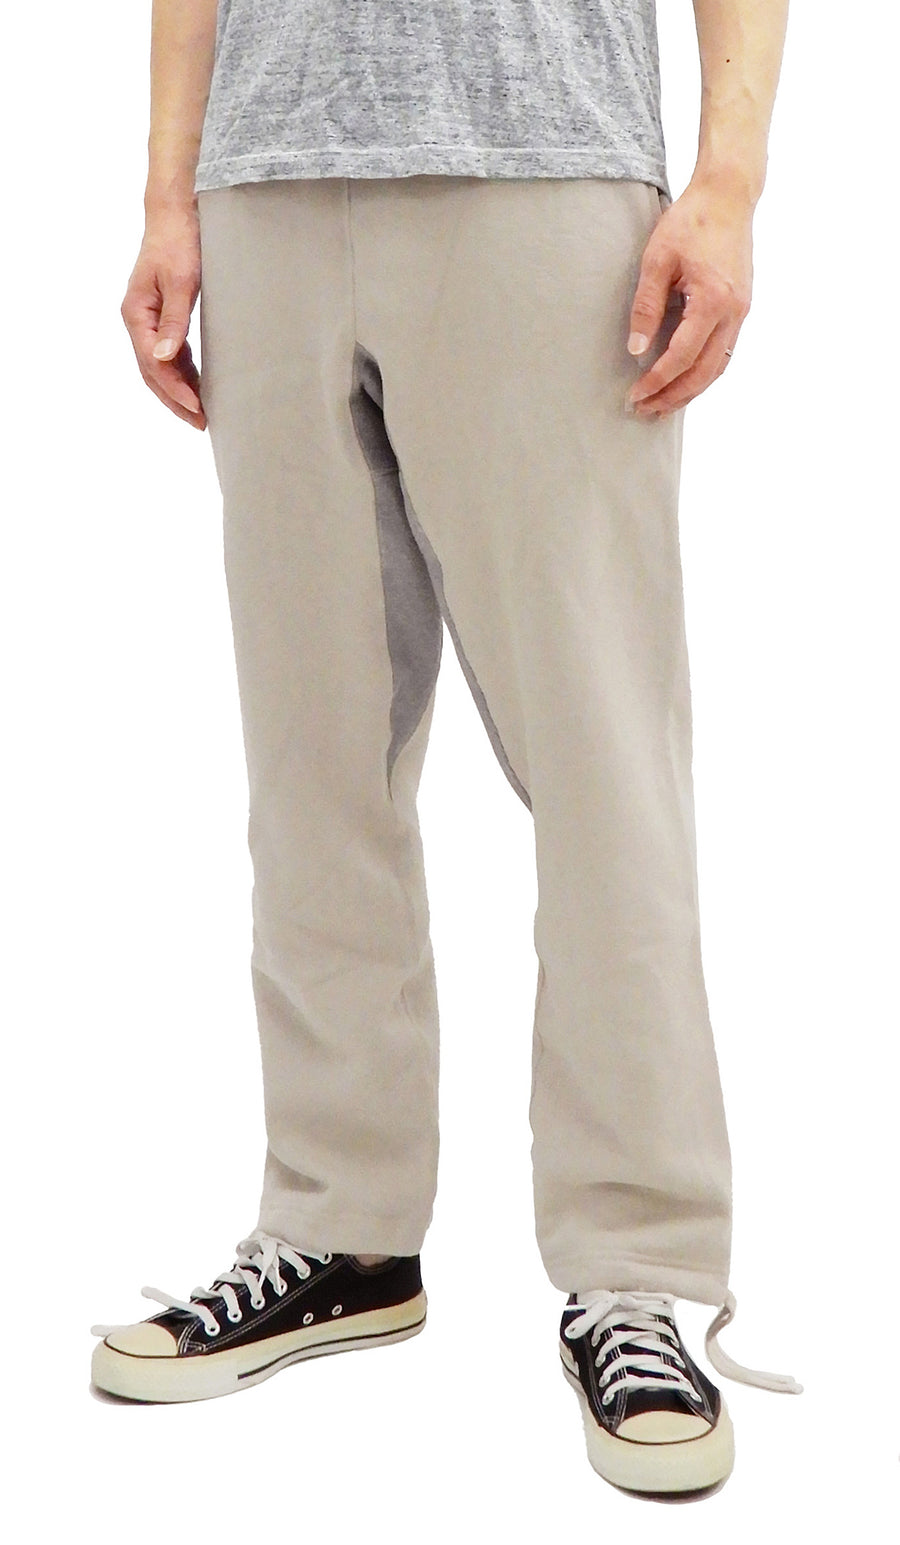 TOYS McCOY Sweatpants Men's Vintage Inspired Plain Straight-Leg Drawstring Pants TMC2380 040 Sand